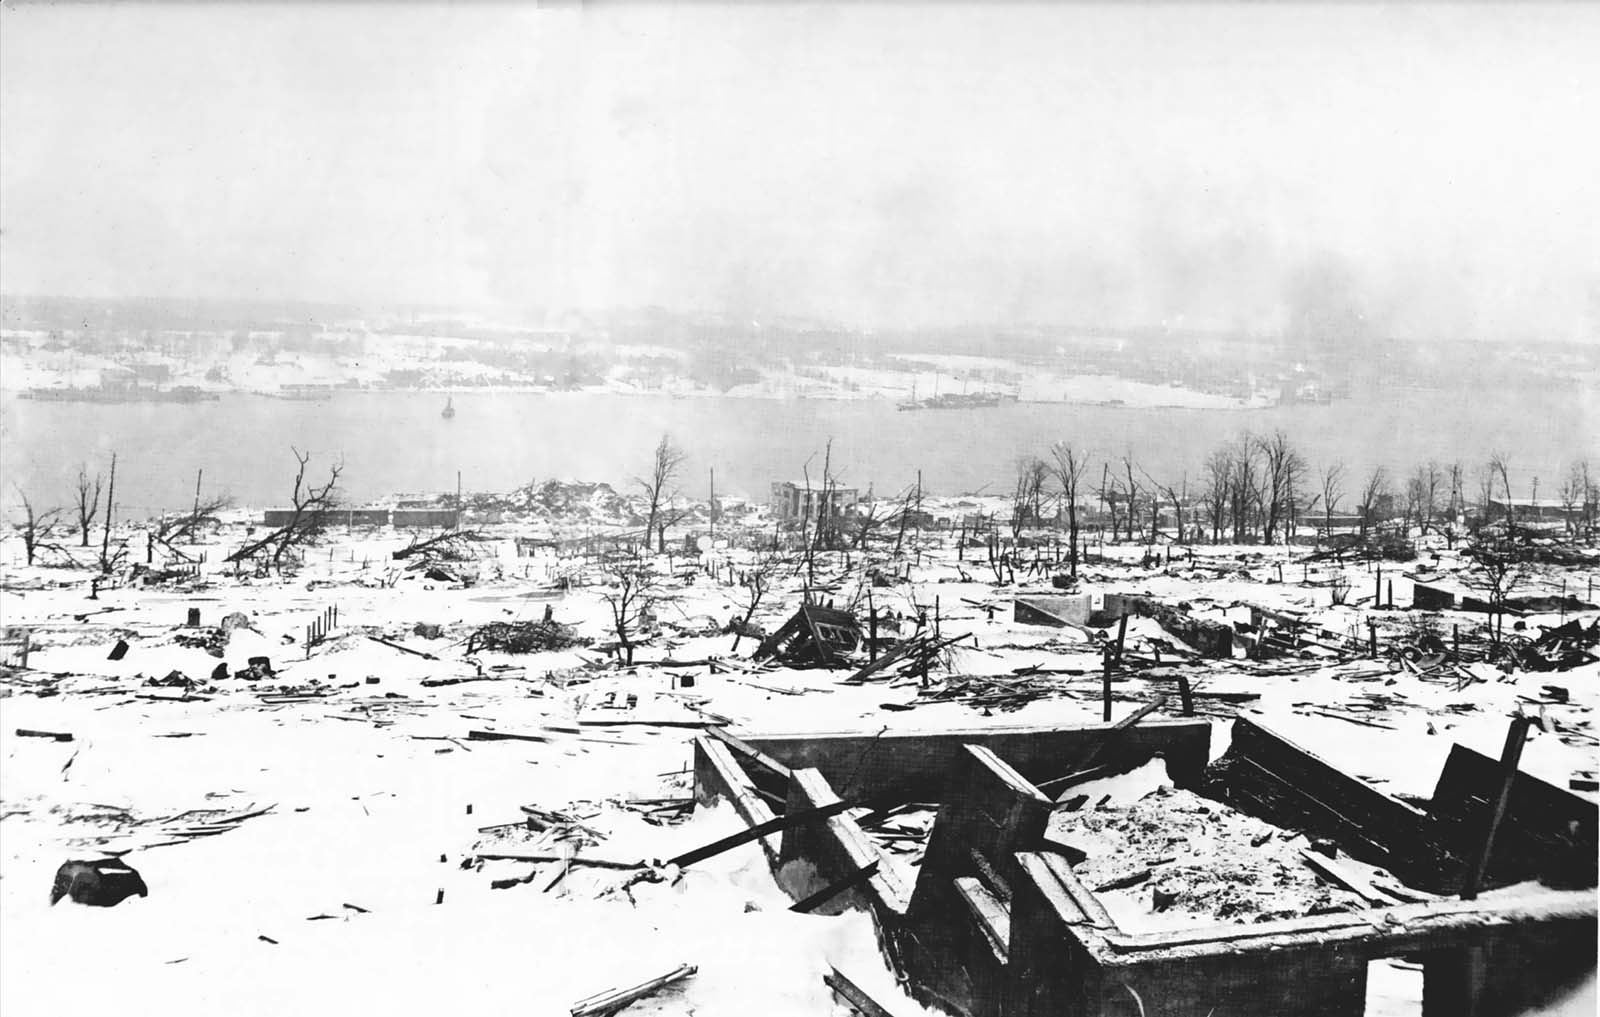 Halifax explosion photographs